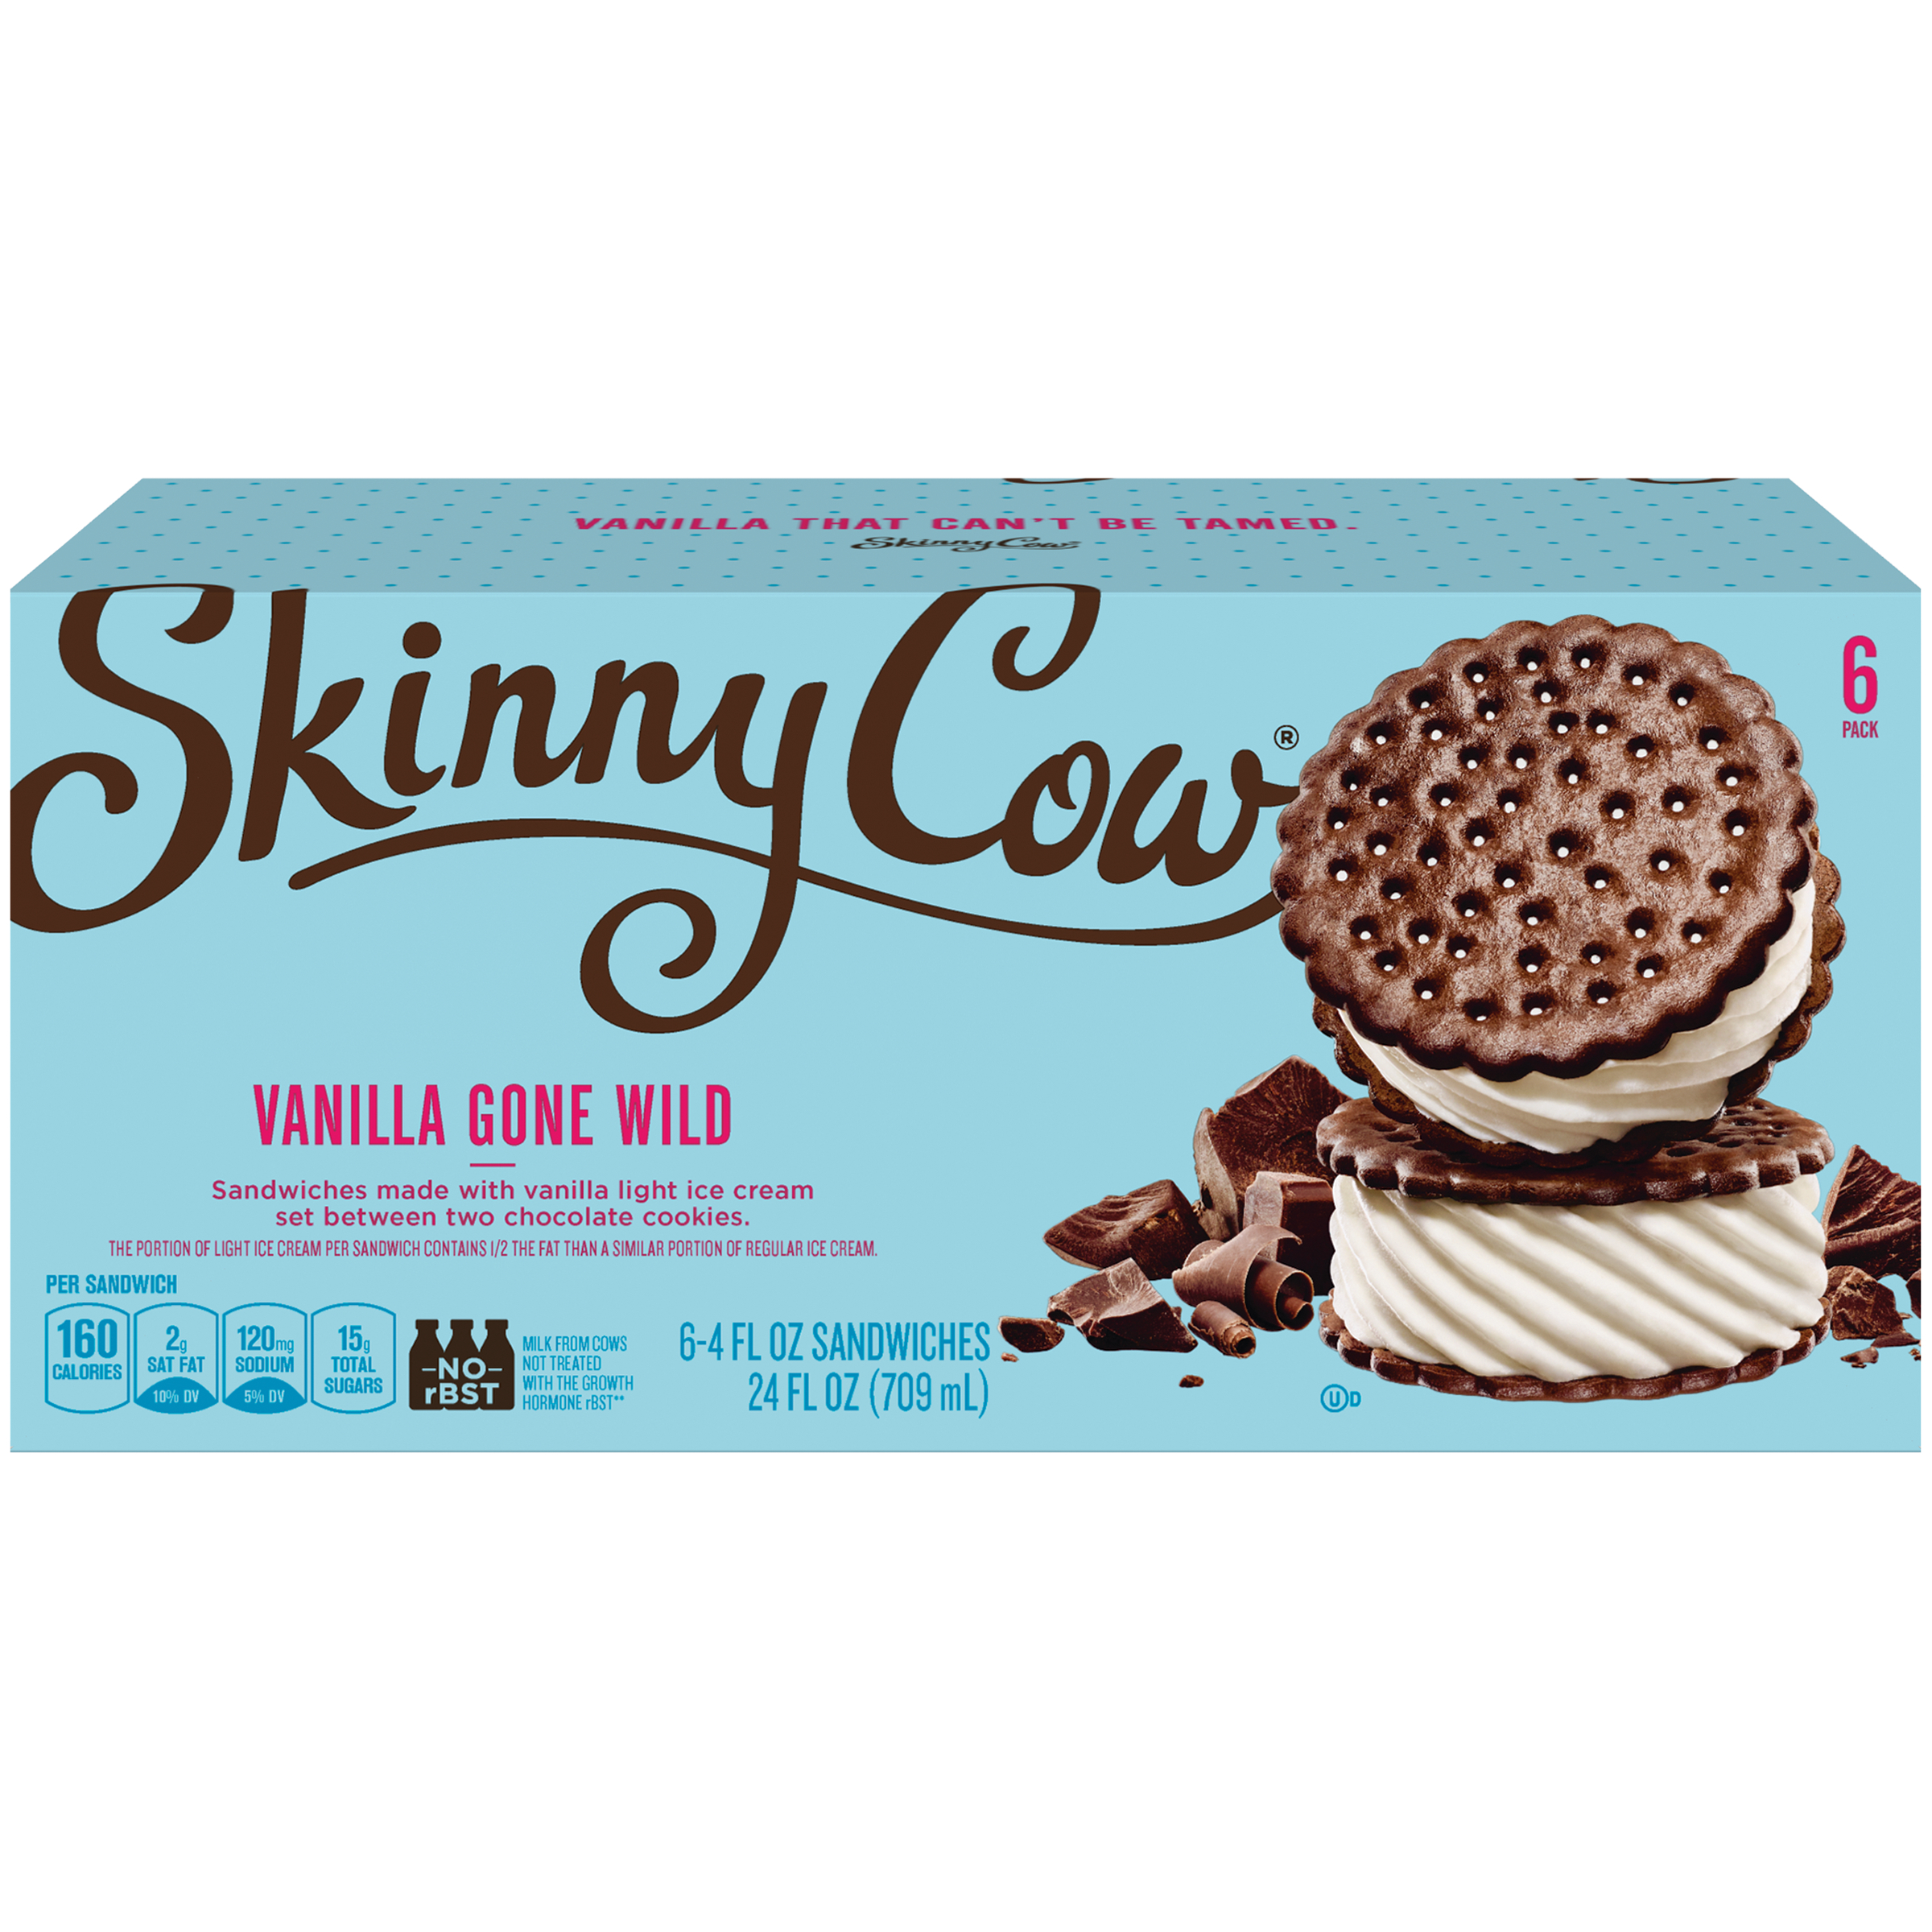 The Skinny Cow Ice Cream Sandwiches, Low Fat, Vanilla, 6 - 4 fl oz sandwiches [24 fl oz (709 ml)]